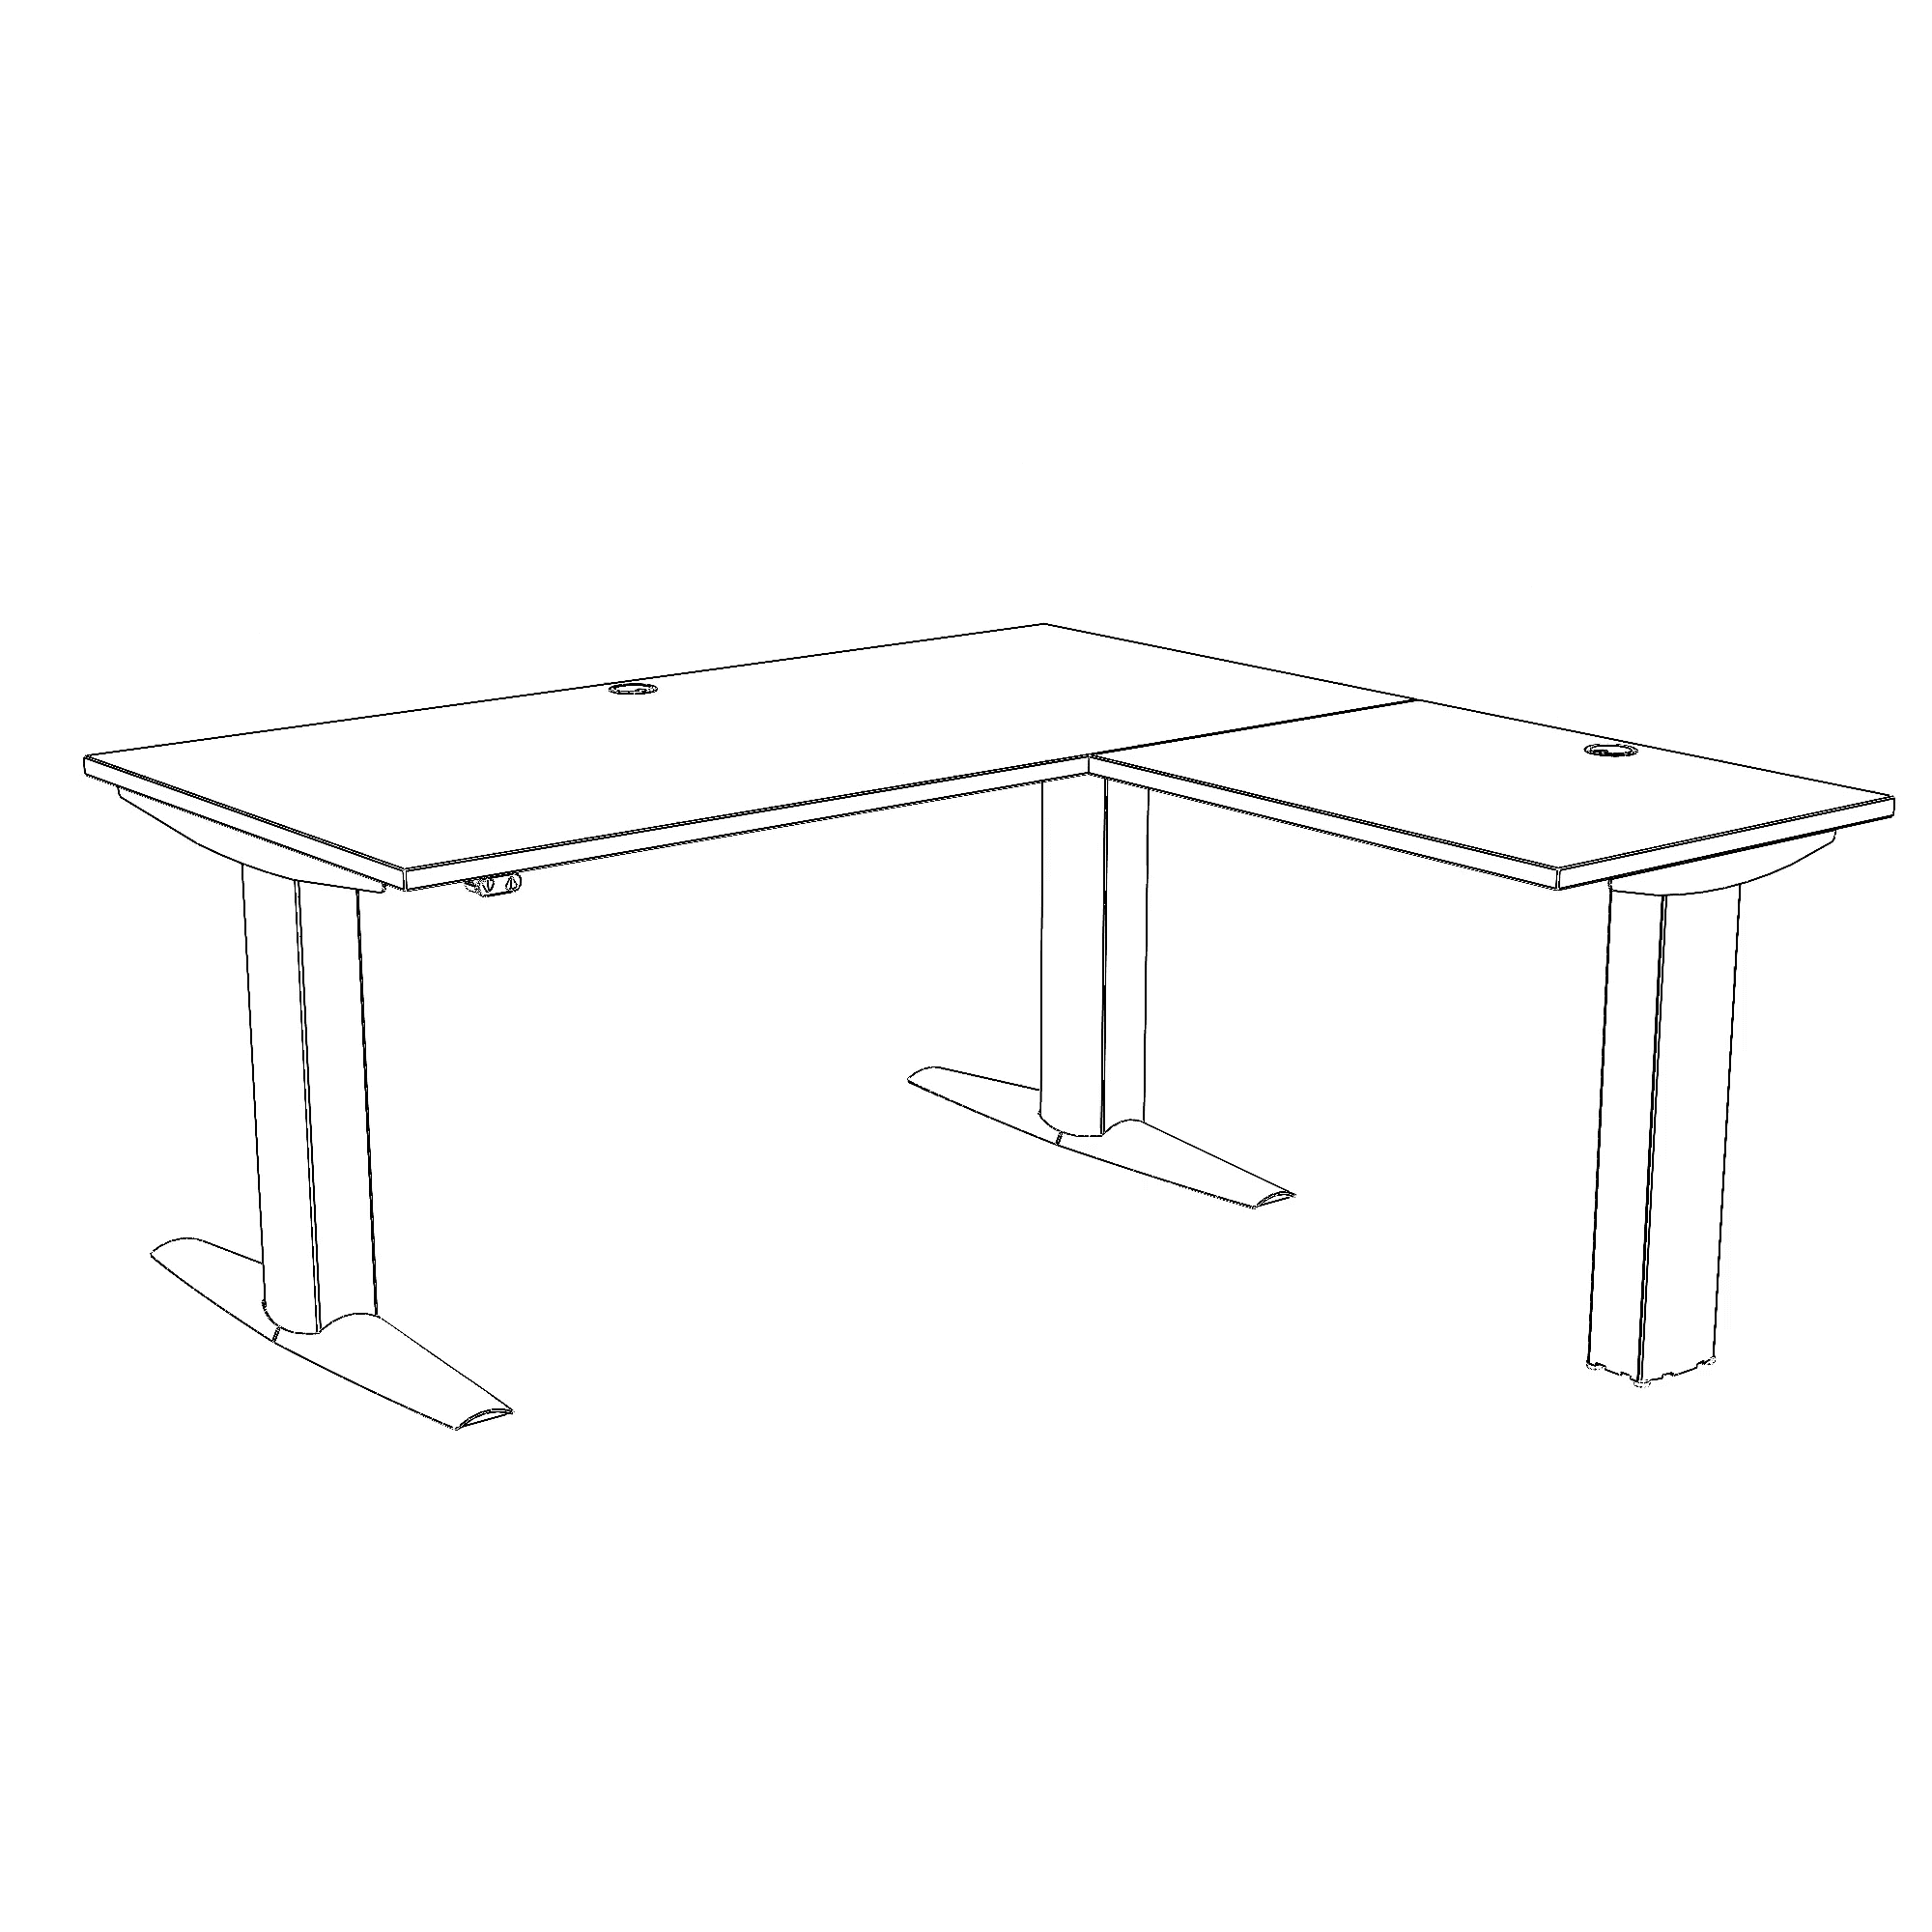 Electric Adjustable Desk | 160x160 cm | Beech with black frame